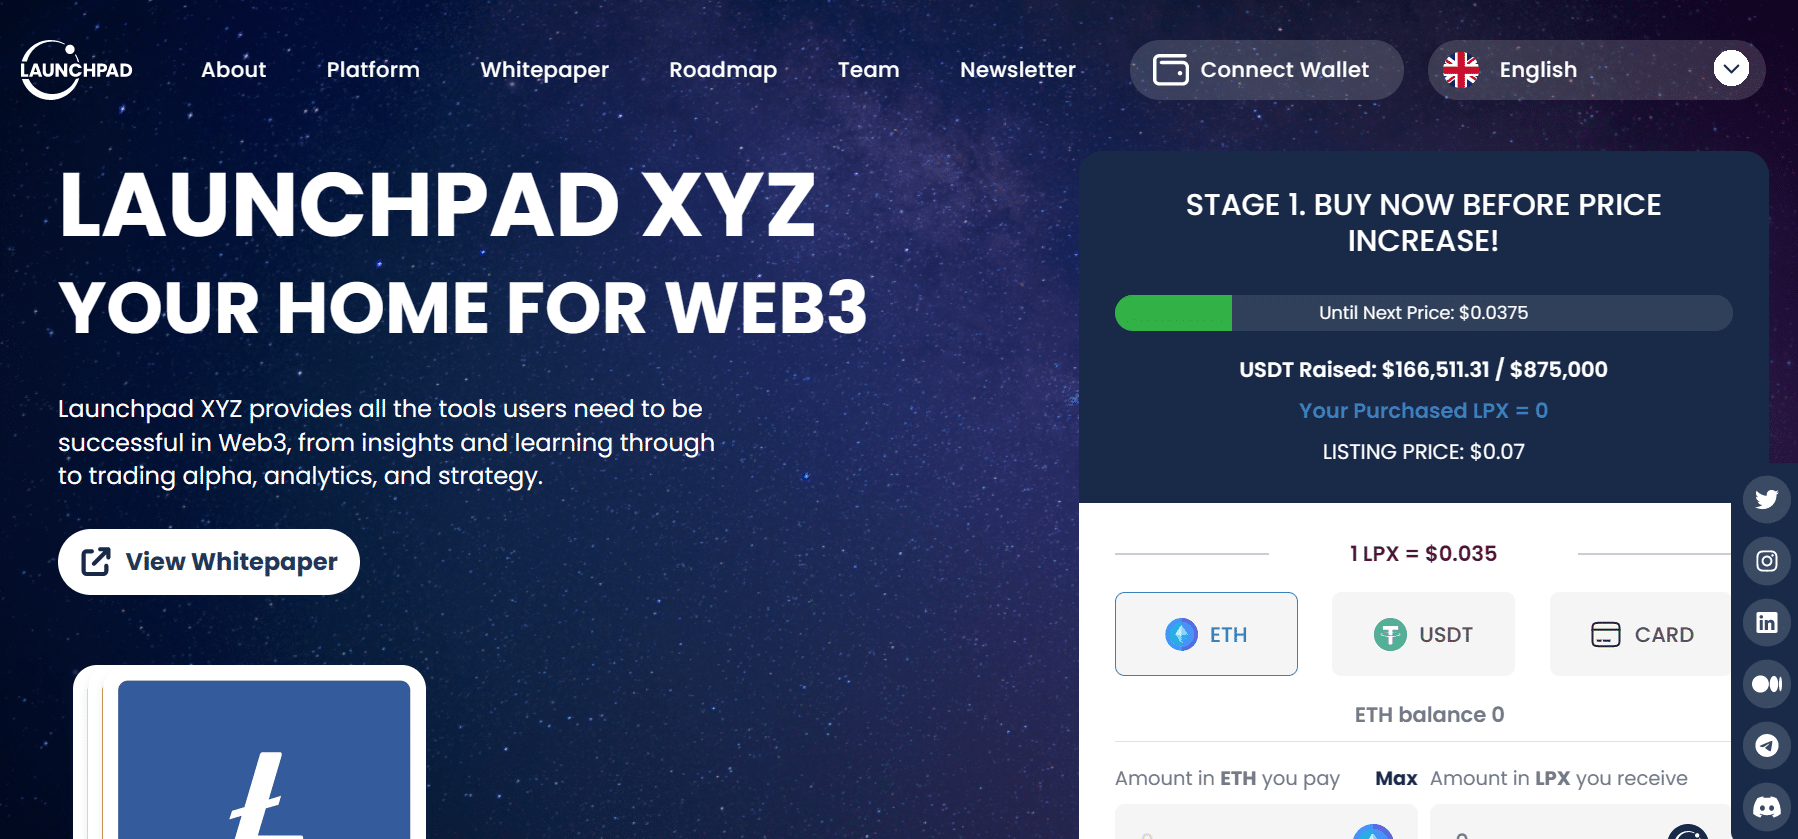 launchpad xyz website